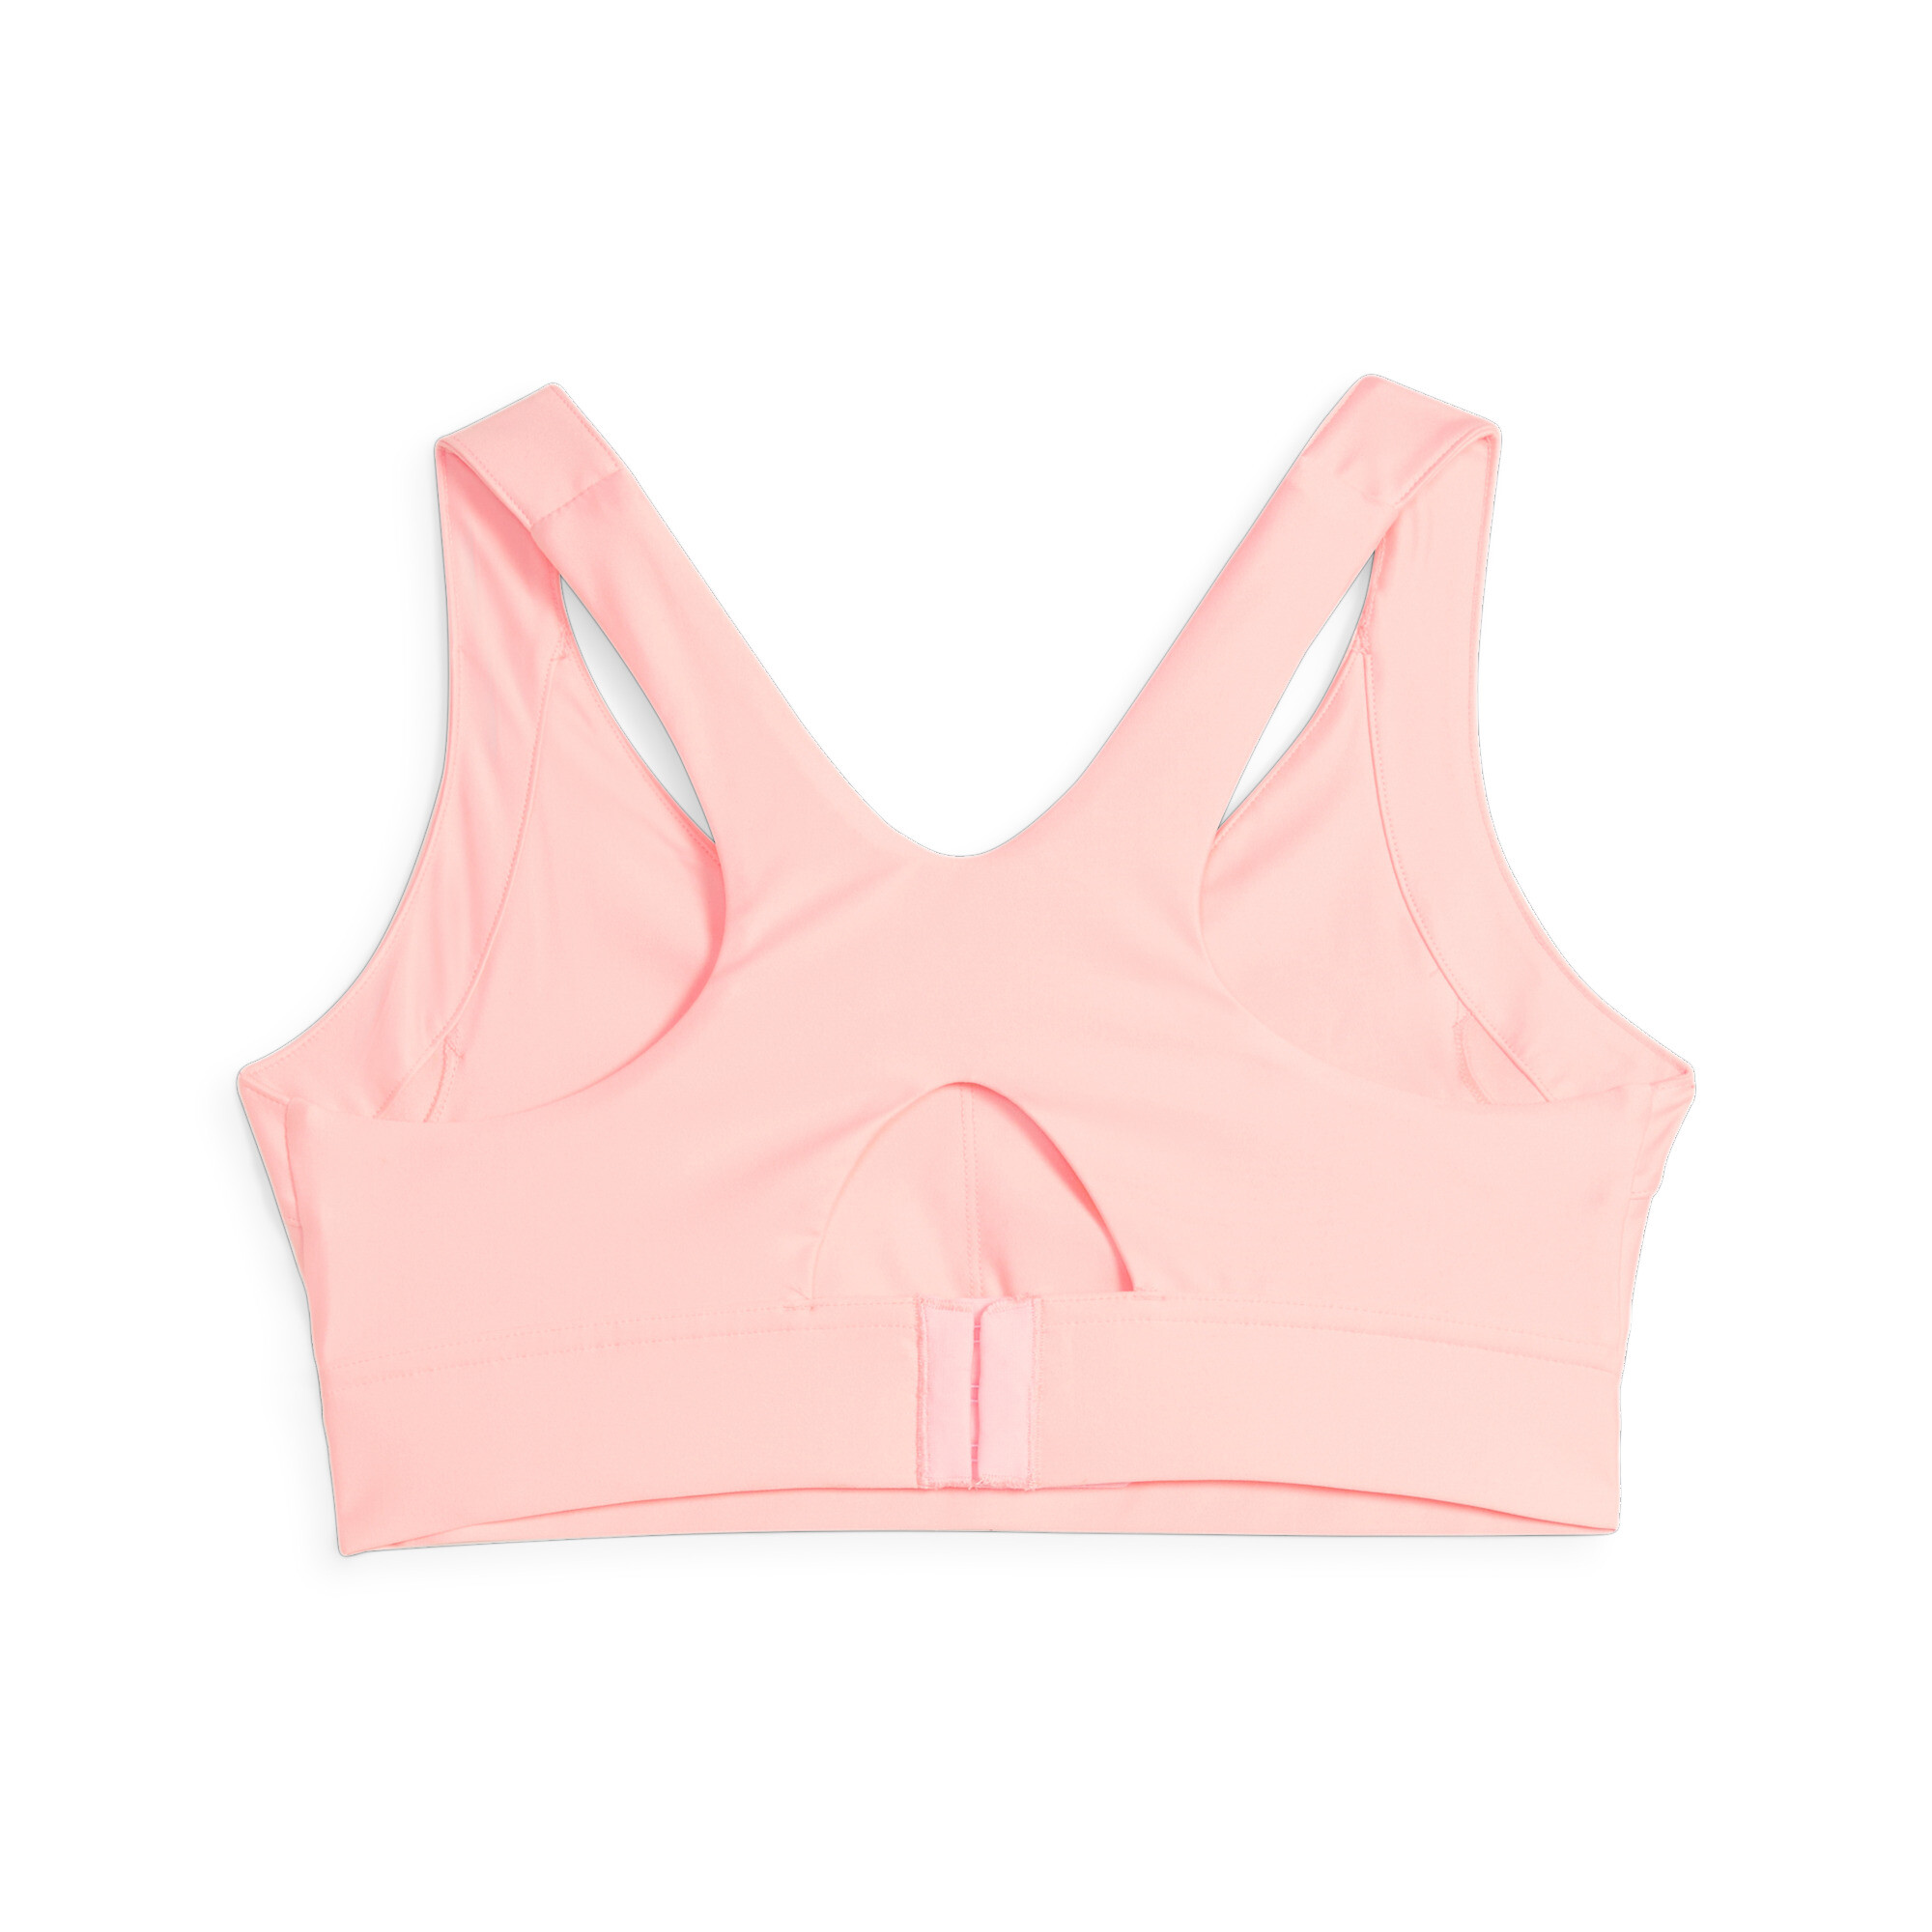 Women's Puma High Support Ultraform Running Bra, Pink, Size XS, Clothing